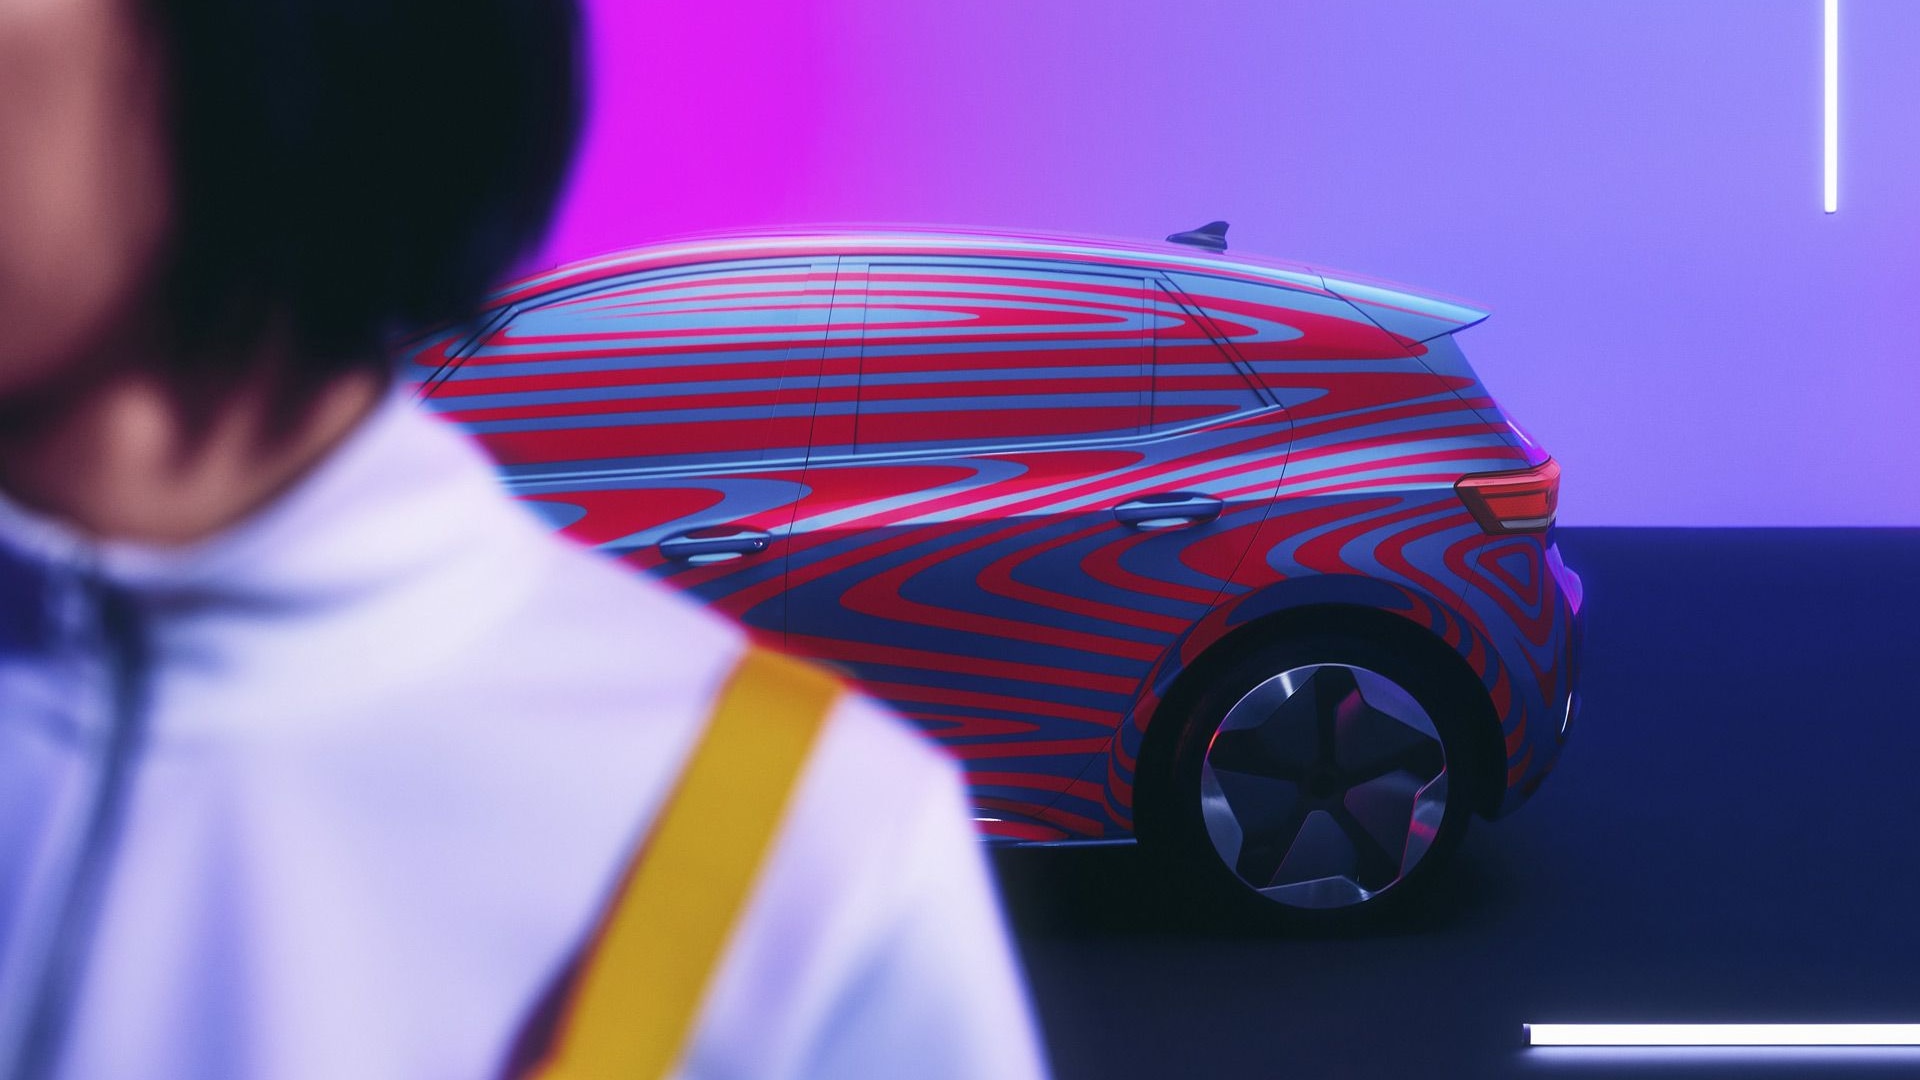 Teaser for 2020 Volkswagen ID 3 debuting at 2019 Frankfurt auto show